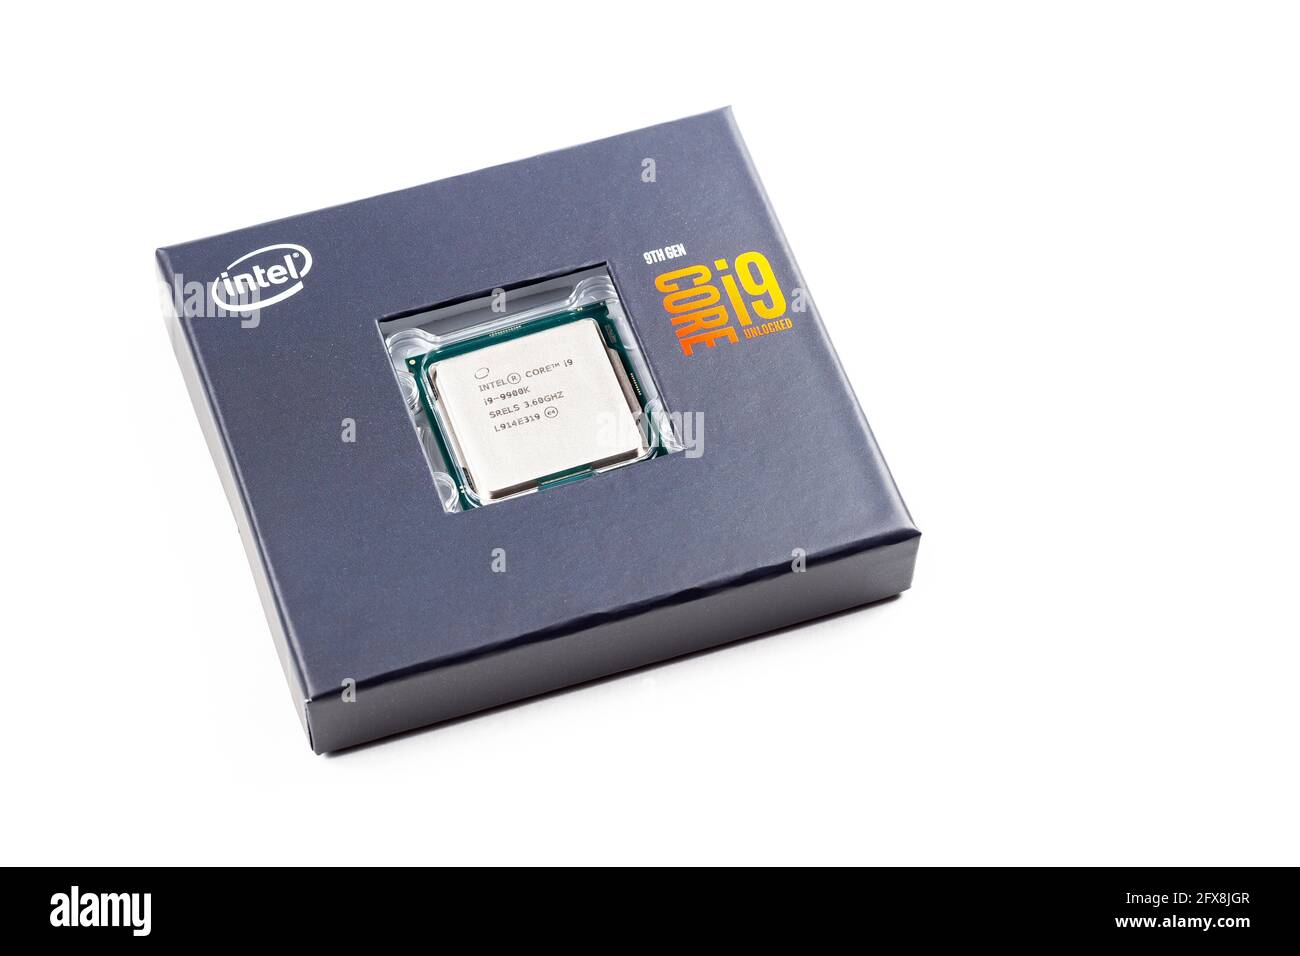 9th generation Intel Core i9 9900k 8 core x86 desktop 